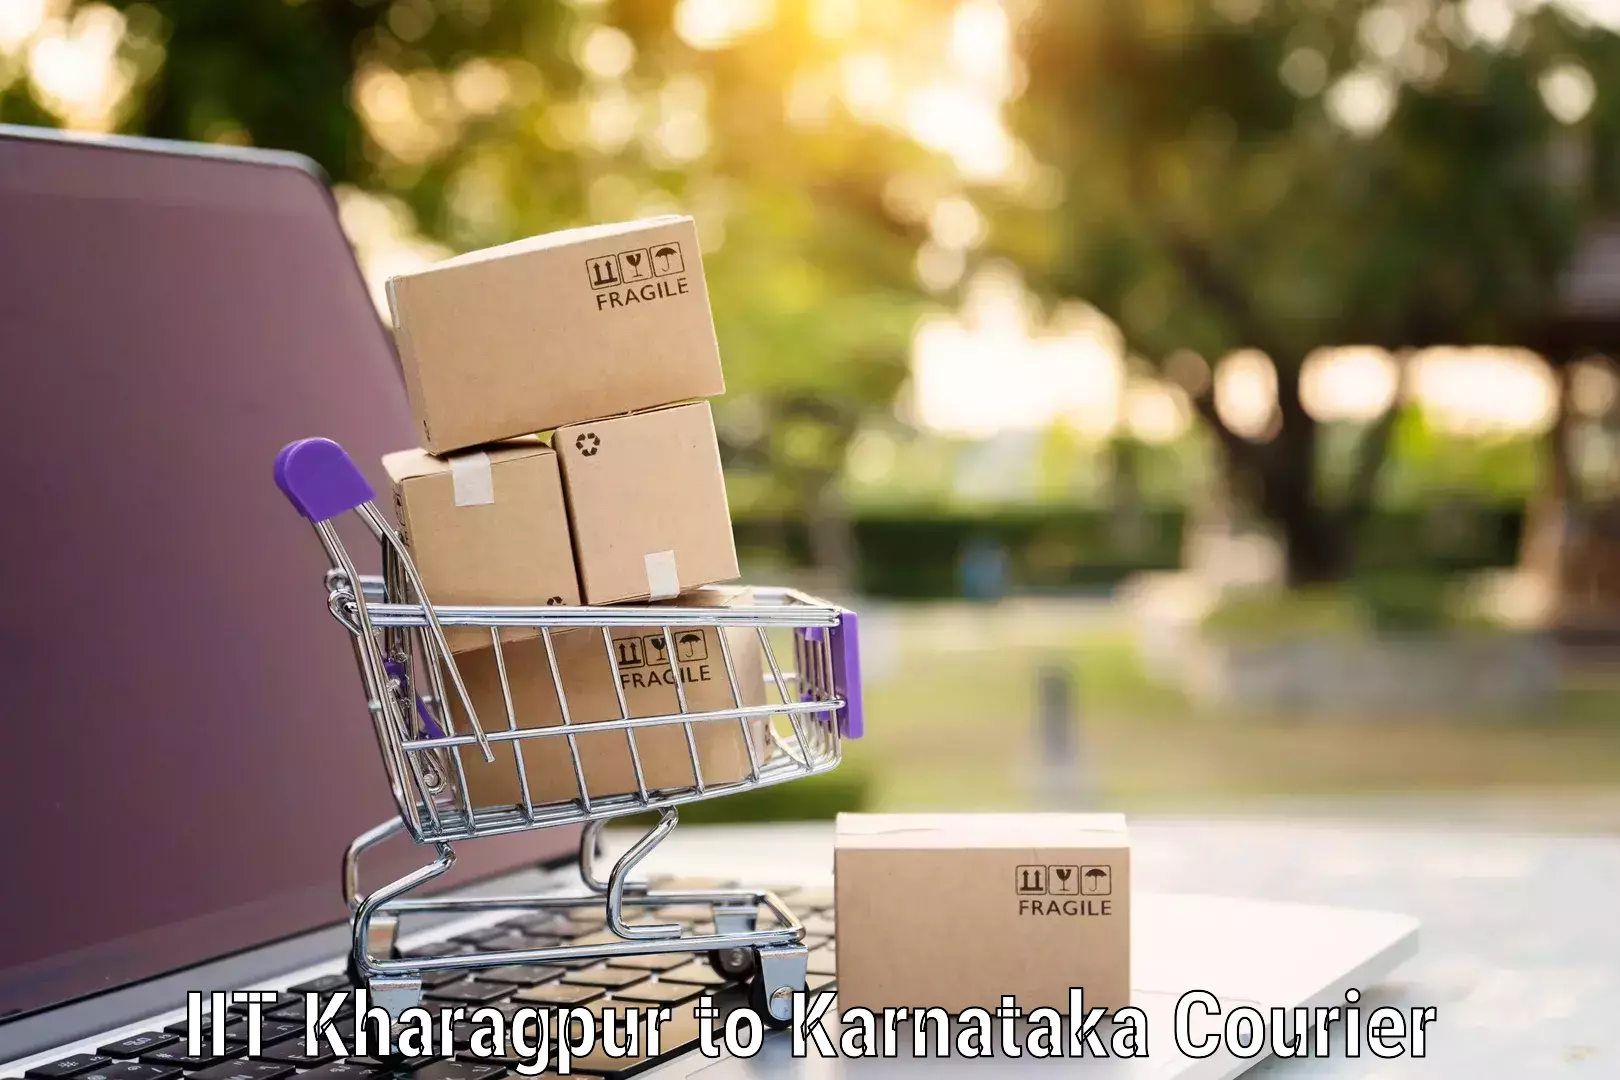 Furniture delivery service in IIT Kharagpur to Karnataka